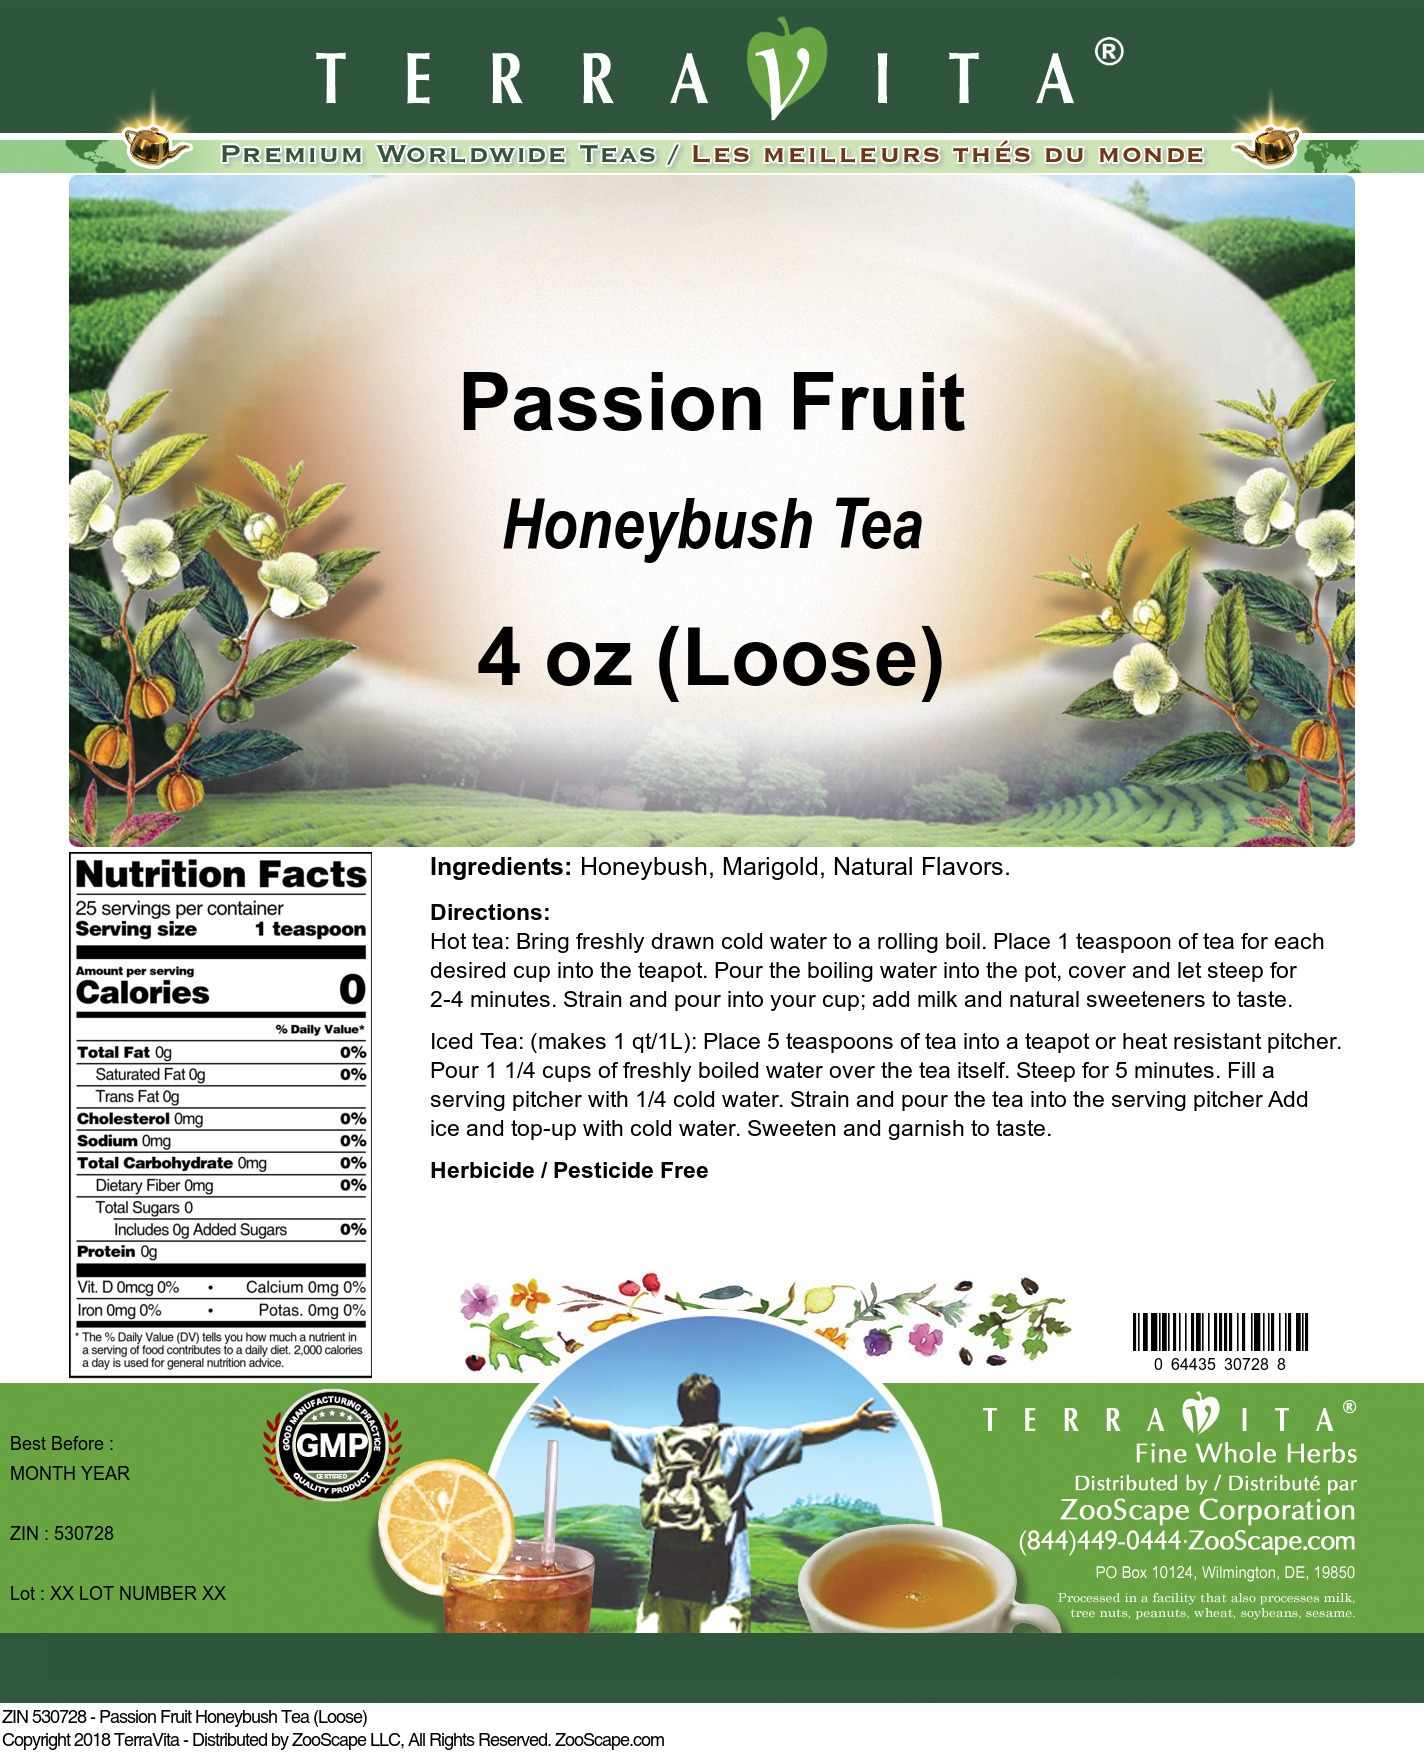 Passion Fruit Honeybush Tea (Loose) - Label